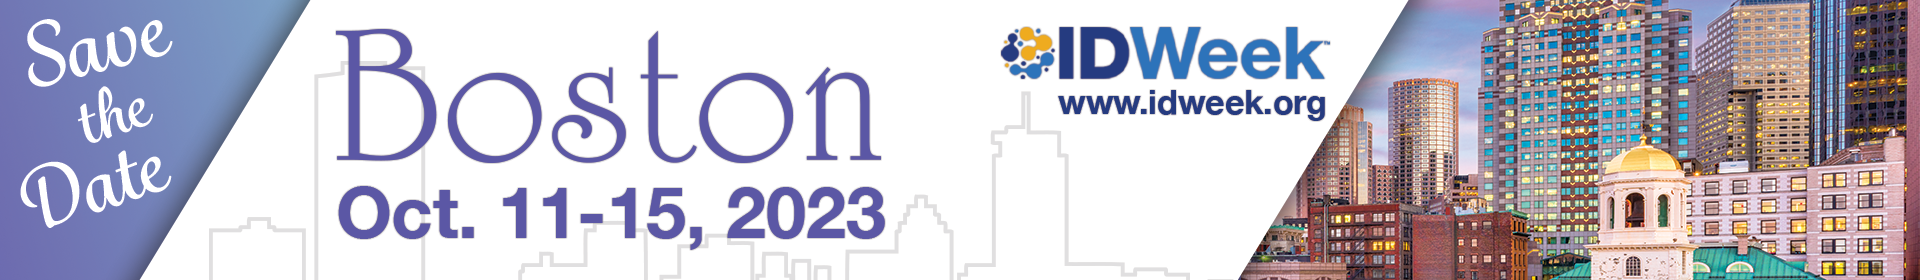 IDWeek 2023 Applications Event Banner